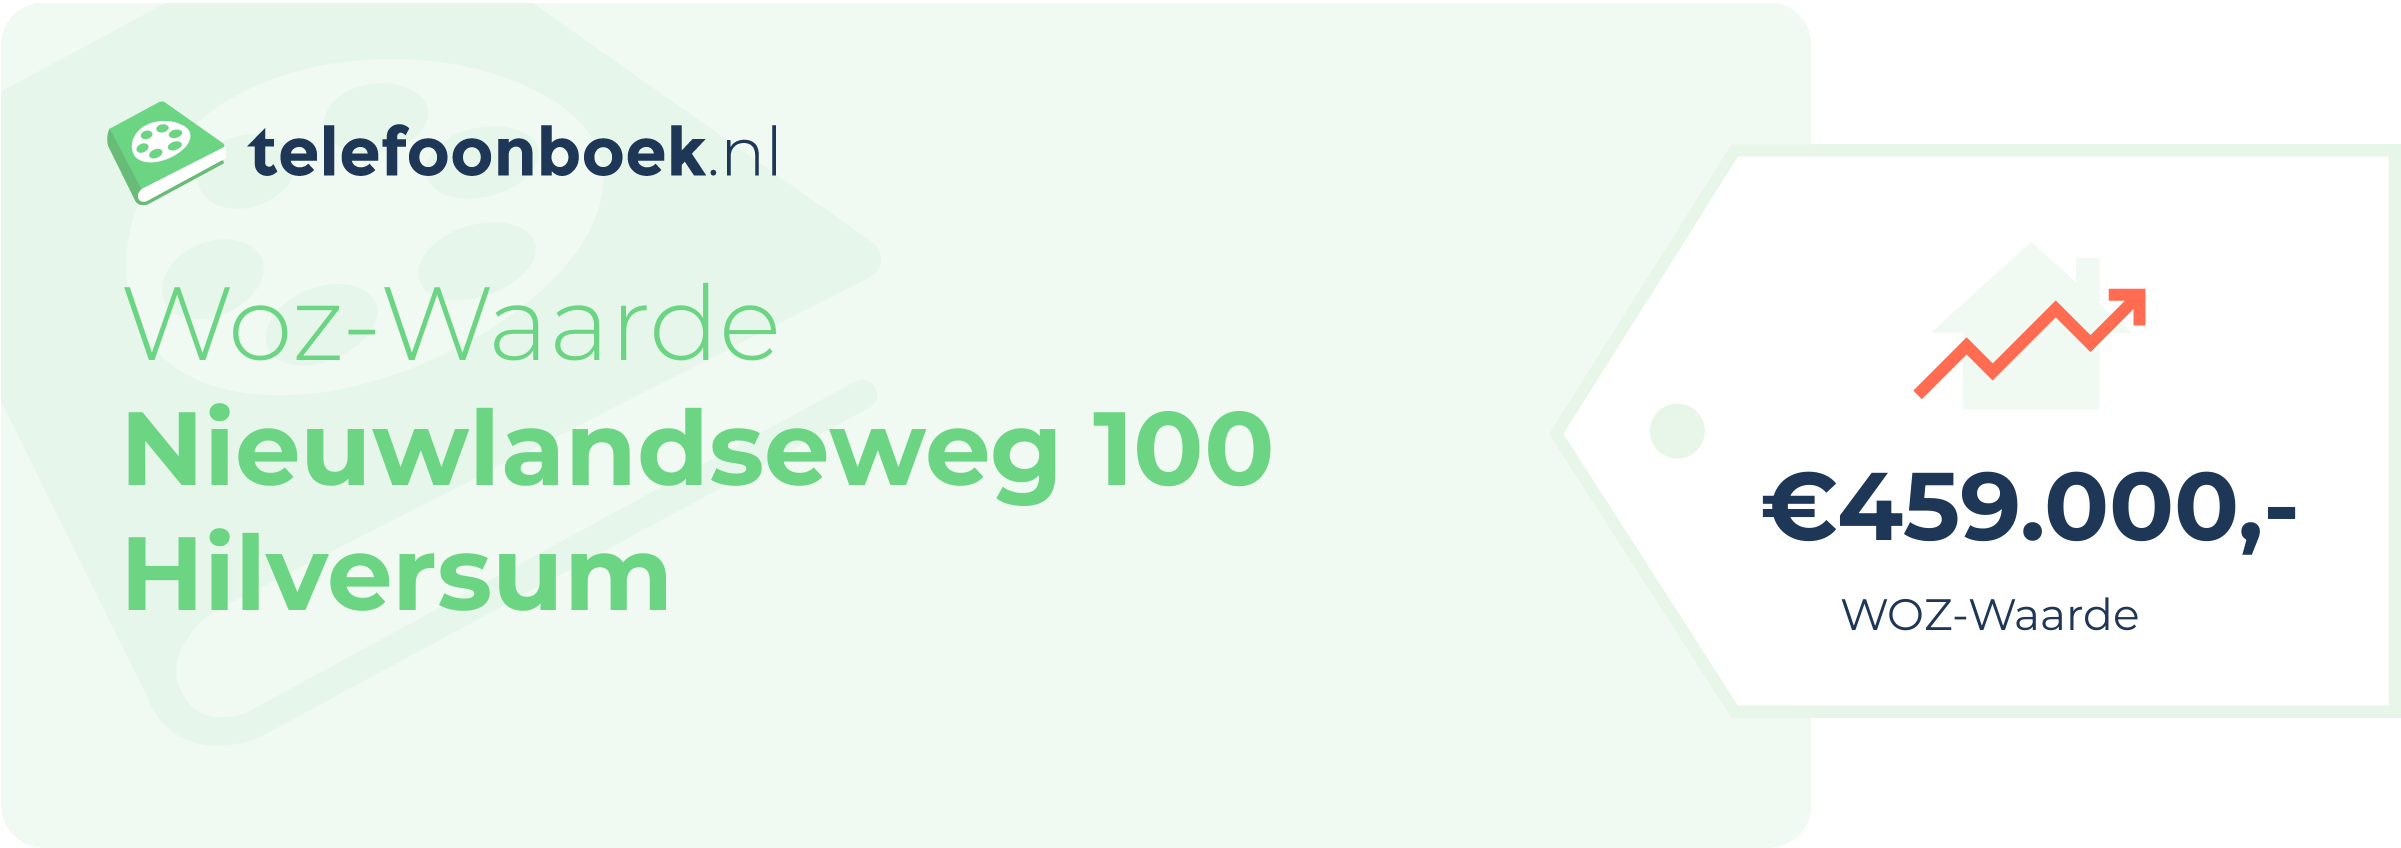 WOZ-waarde Nieuwlandseweg 100 Hilversum